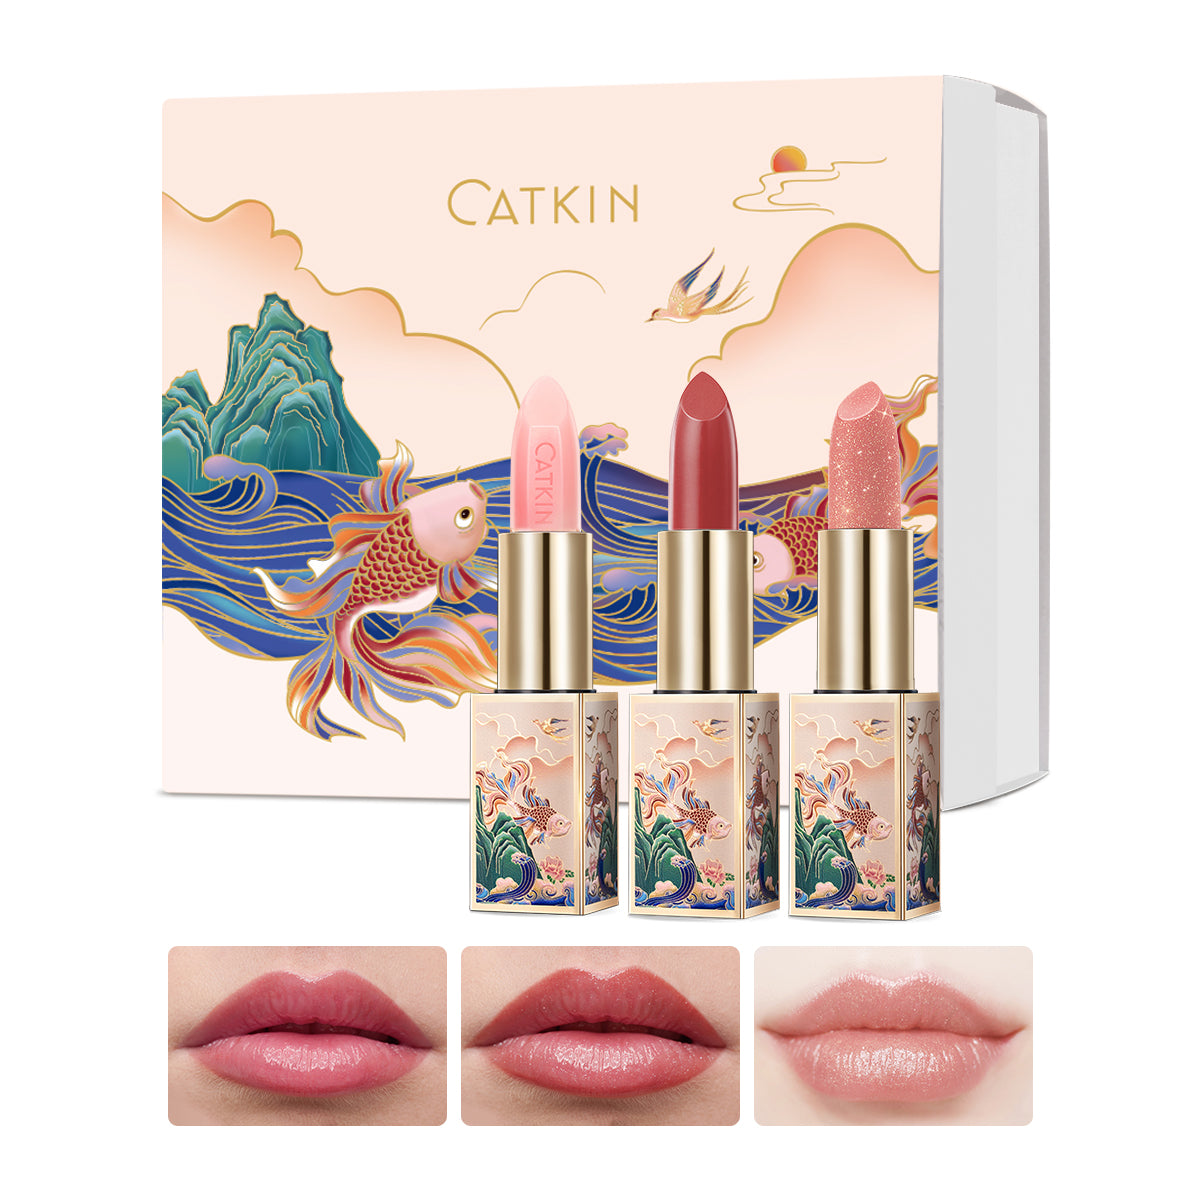 CATKIN Lip Care Gift Set 3pcs Lip Balms Set